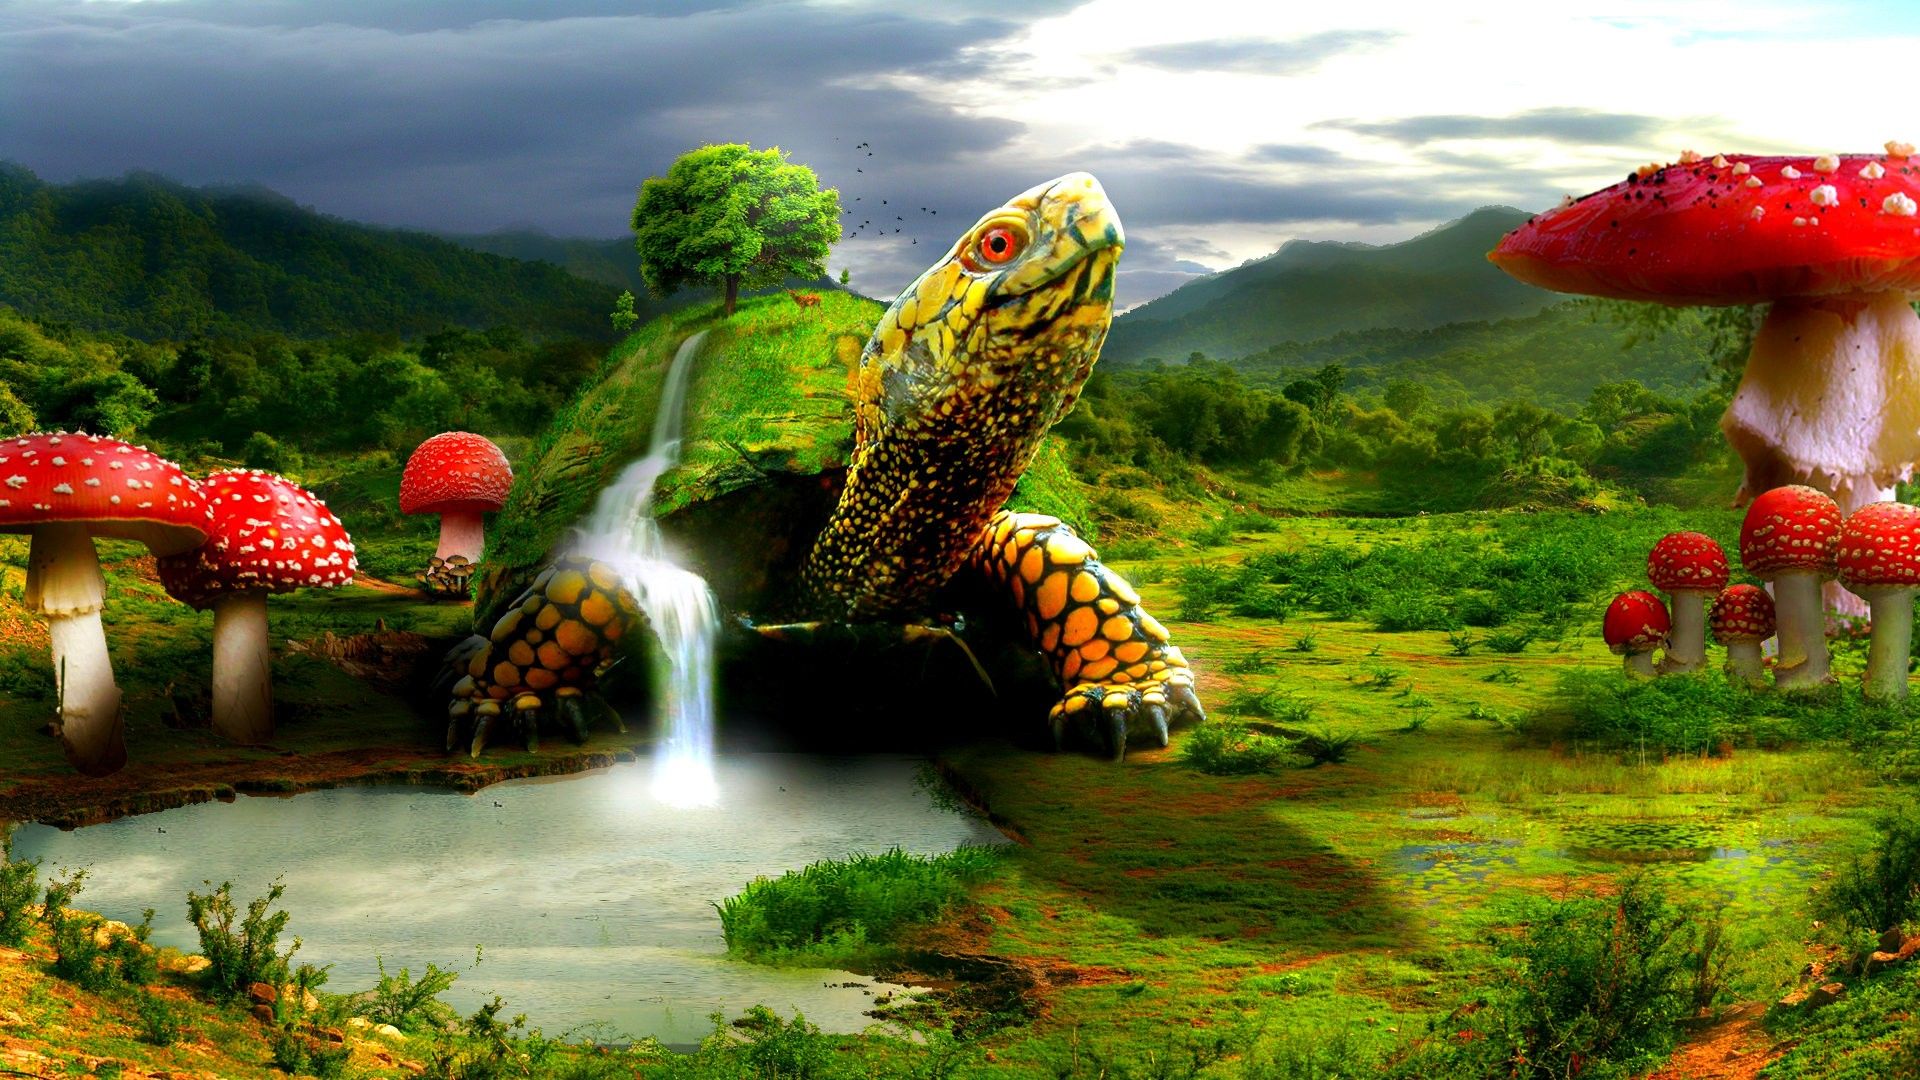 Abstract Turtle HD Wallpaper HD Wallpaper Desktop Image Download